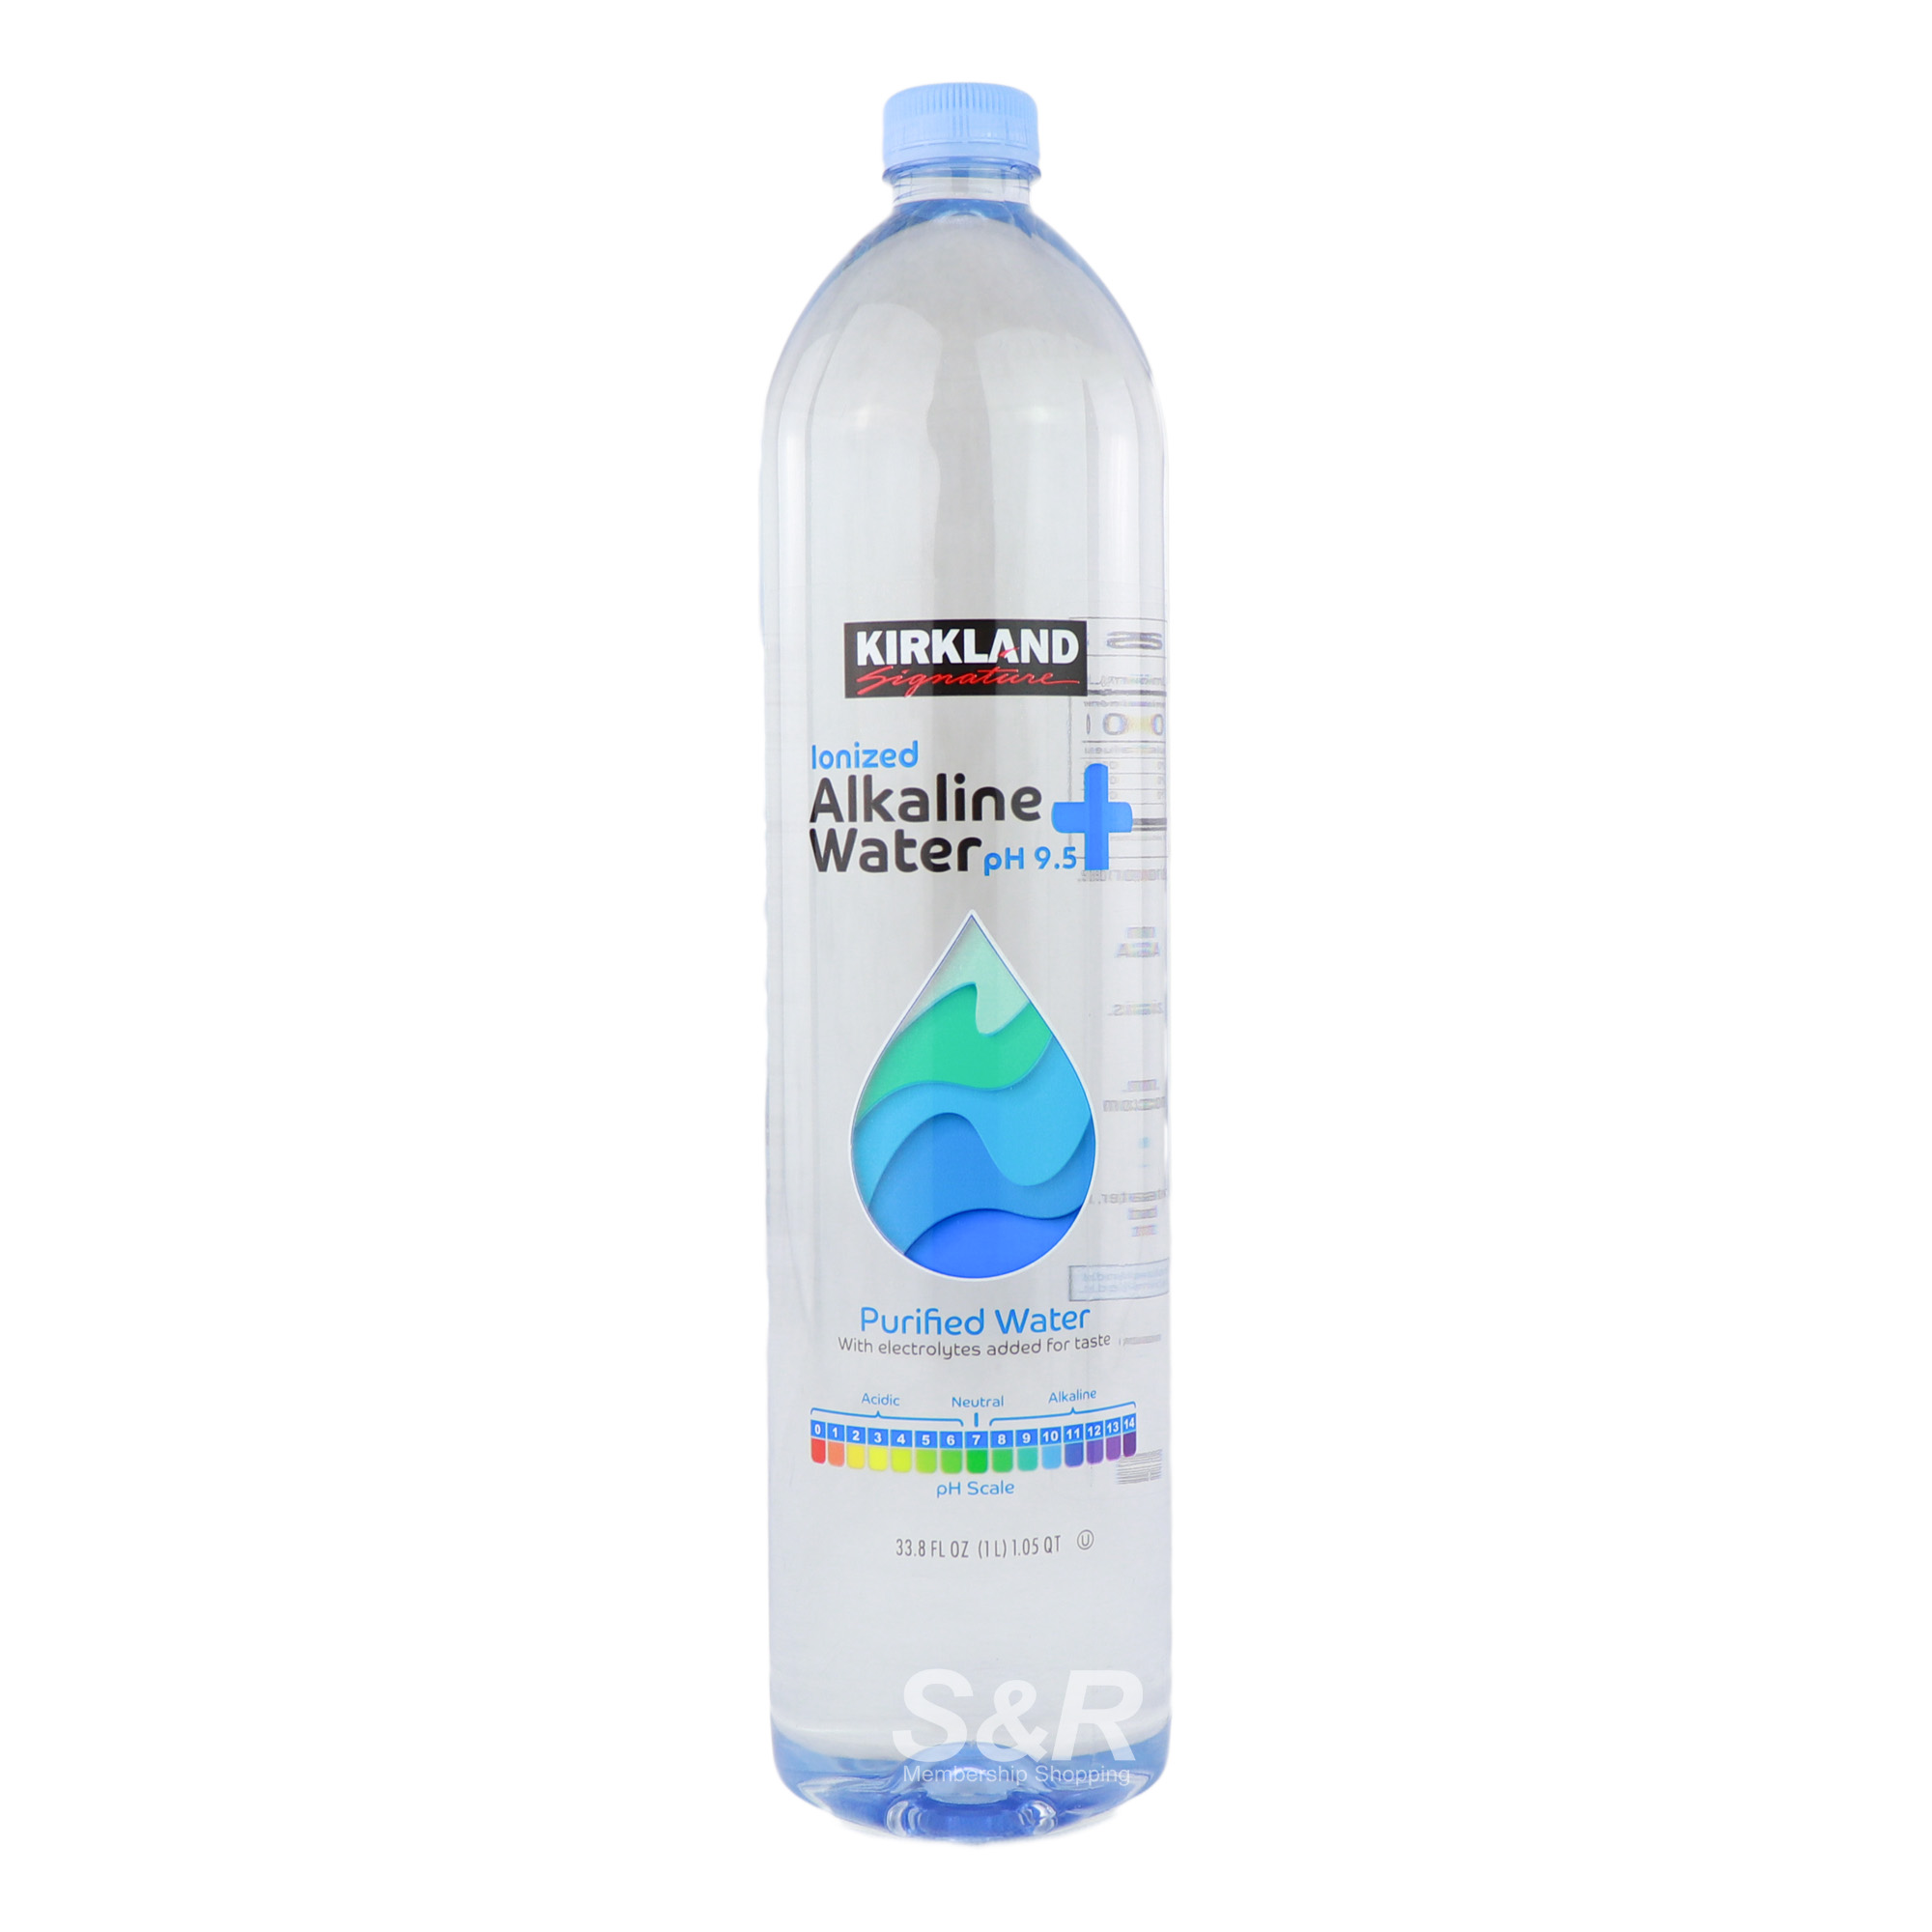 Kirkland Signature Ionized Alkaline Water pH 9.5 1L